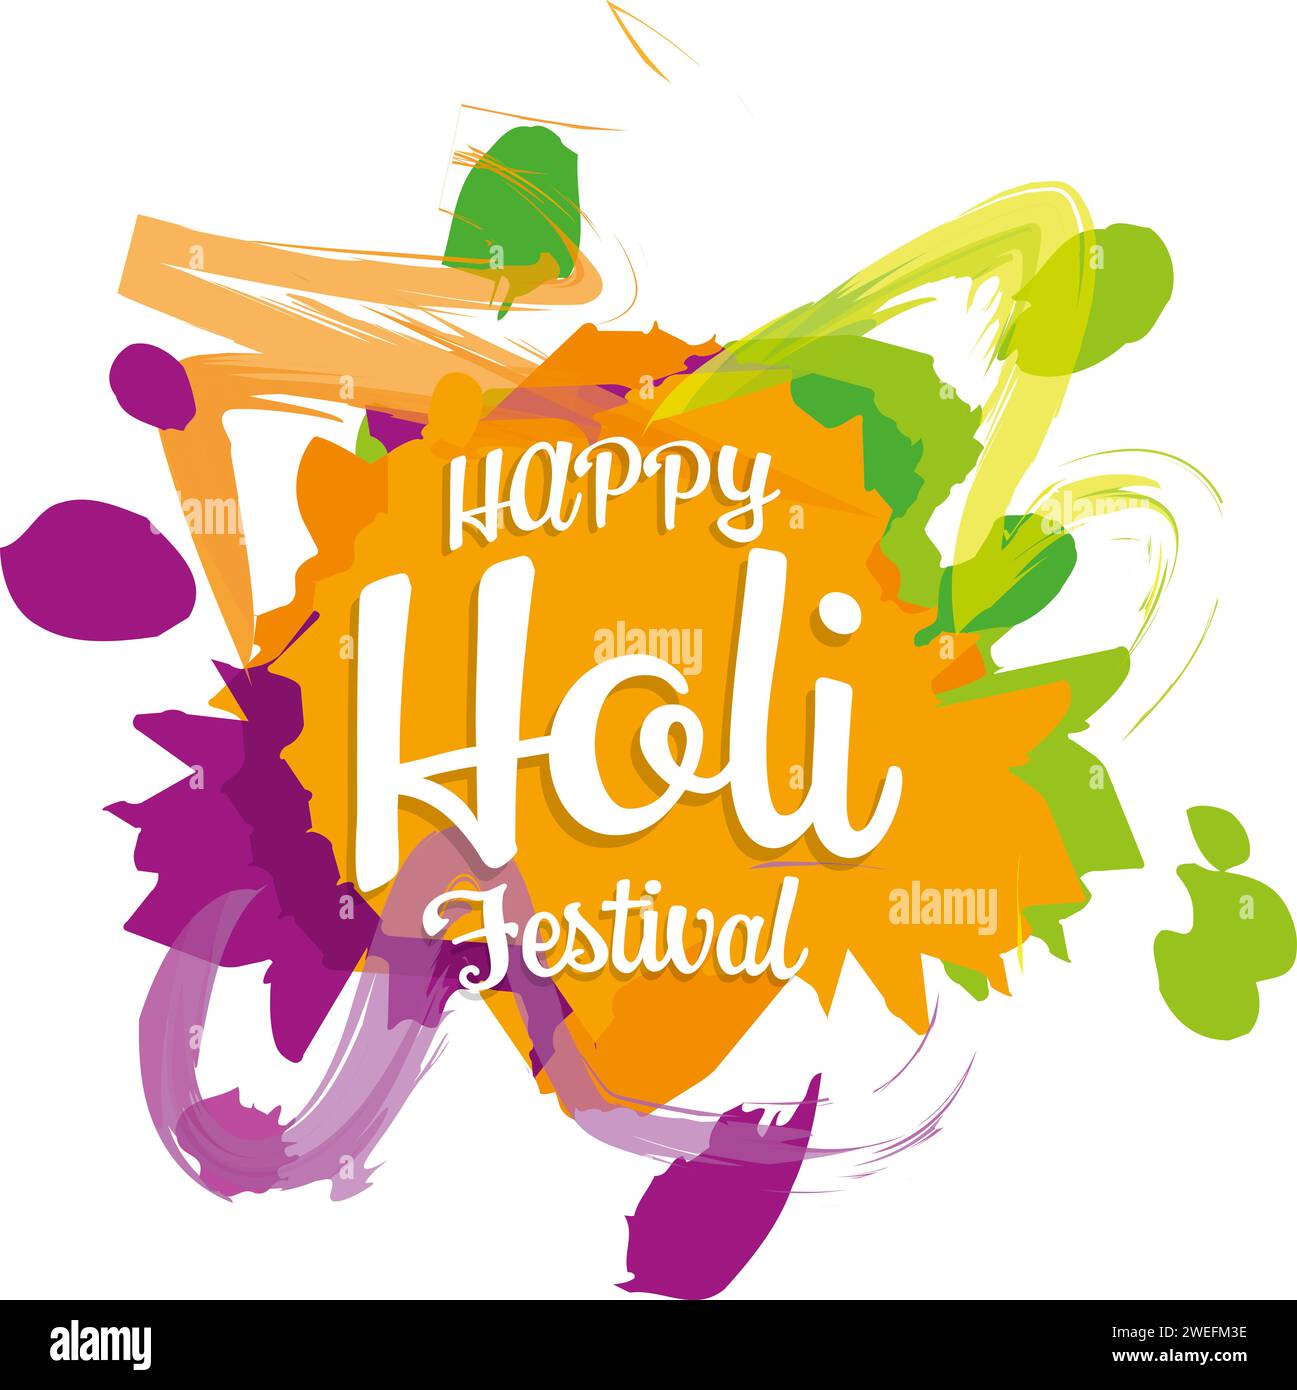 Vivid color vector illustration of a holi festival poster, the color yellow predominates Stock Photo